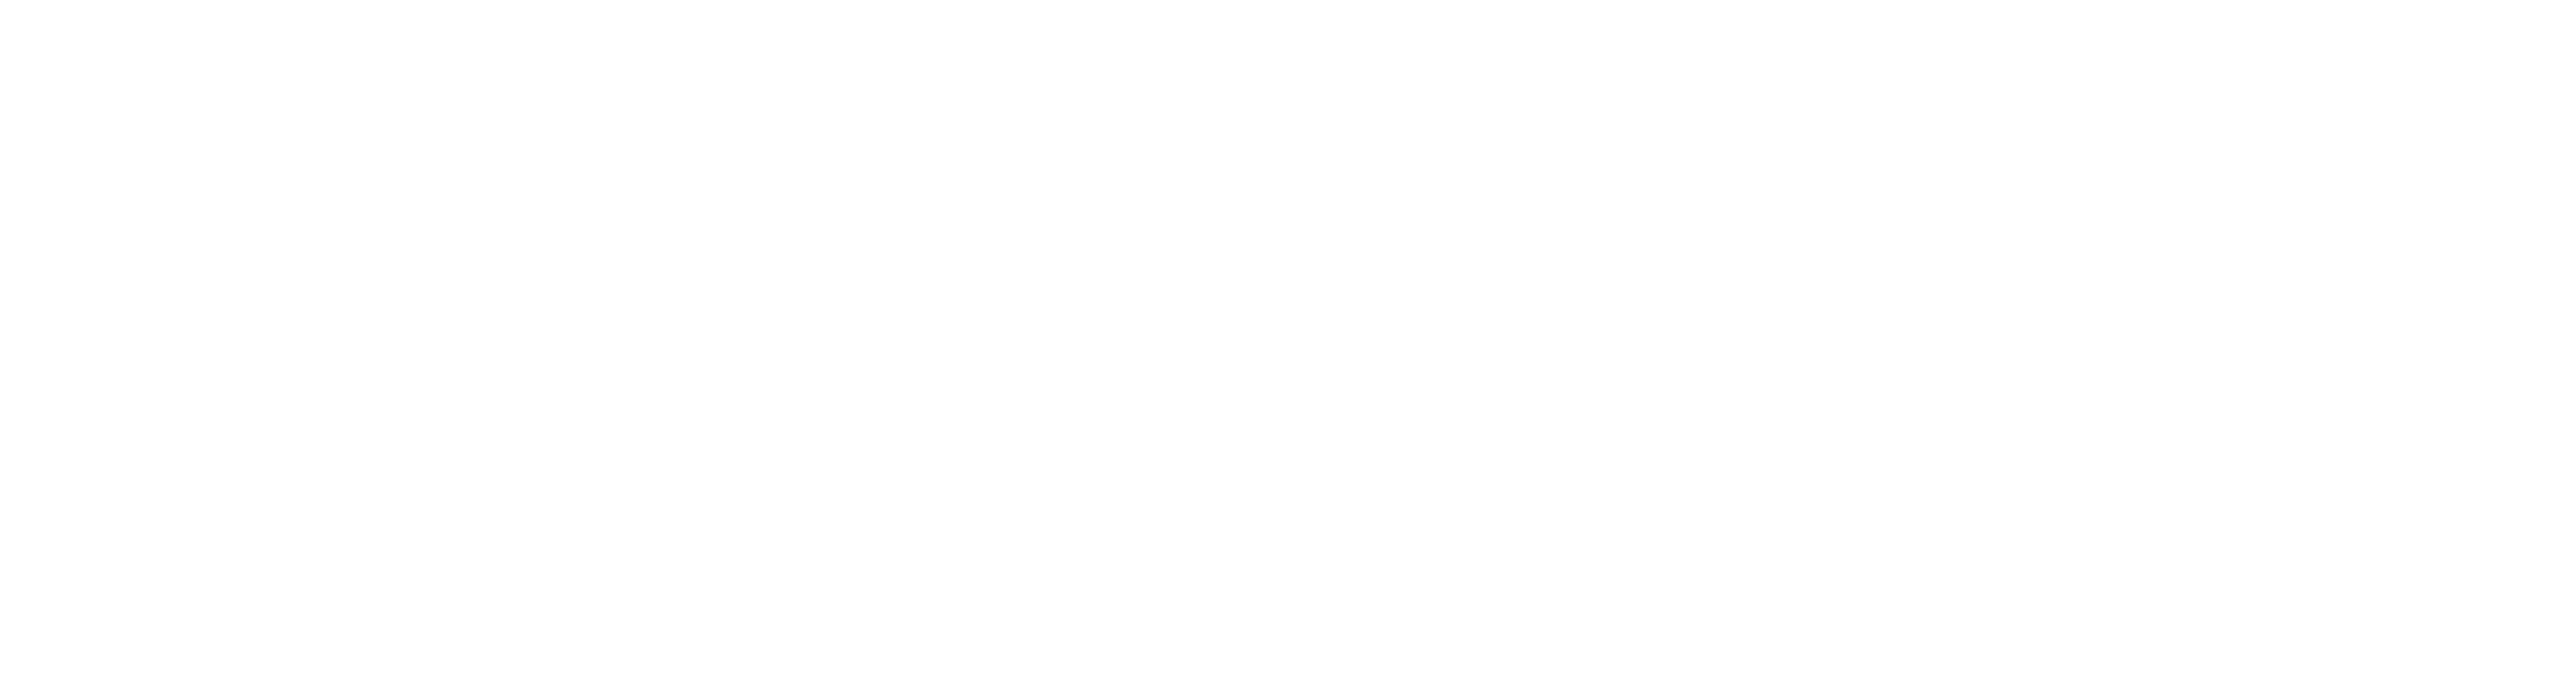 AniCura Dierzorg - Kruiningen logo